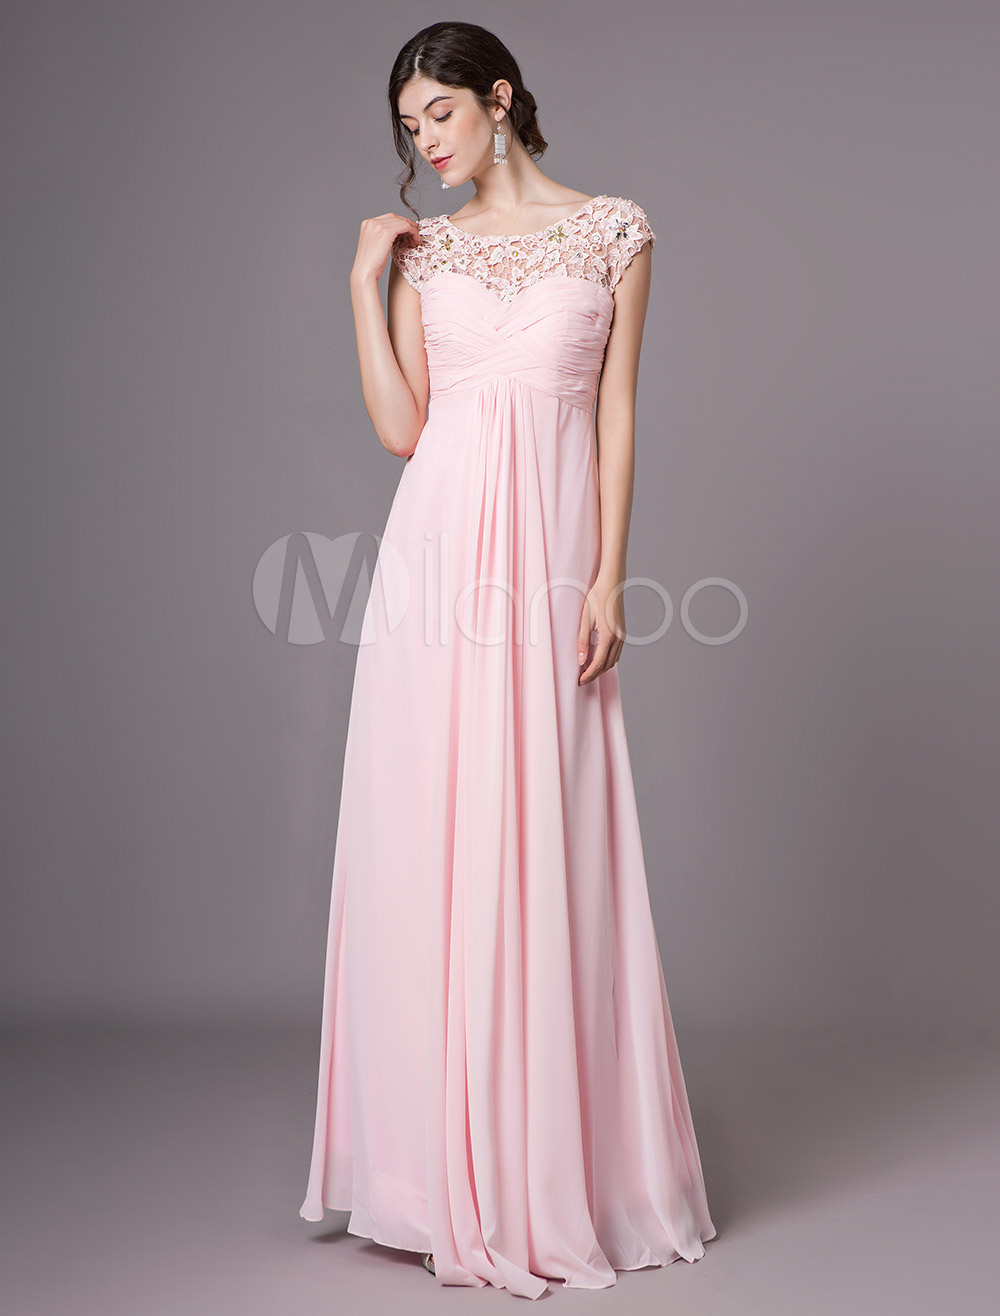 Soft Pink Prom Dresses Lace Chiffon Beaded Long Formal Evening Dress ...